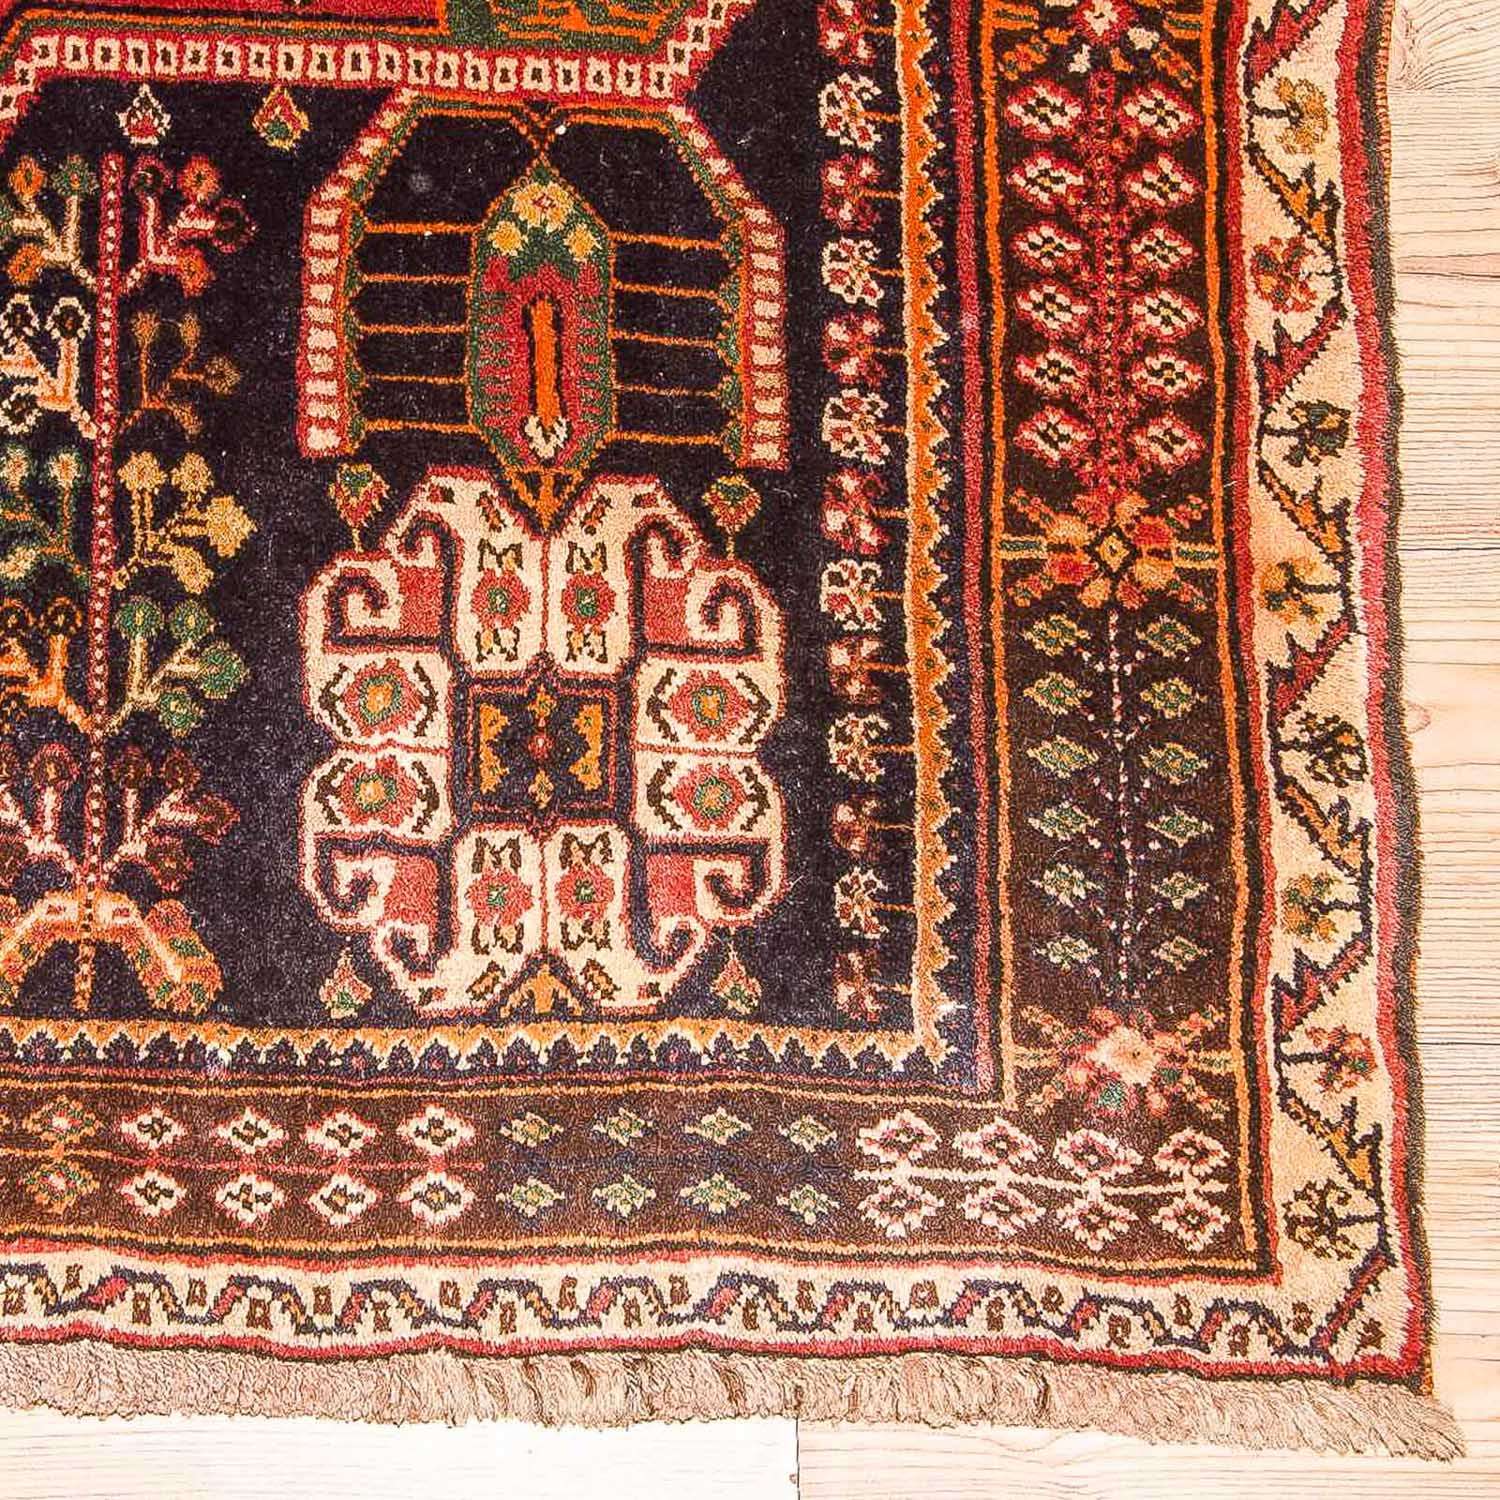 Perský koberec - Nomádský - 253 x 161 cm - rezavá